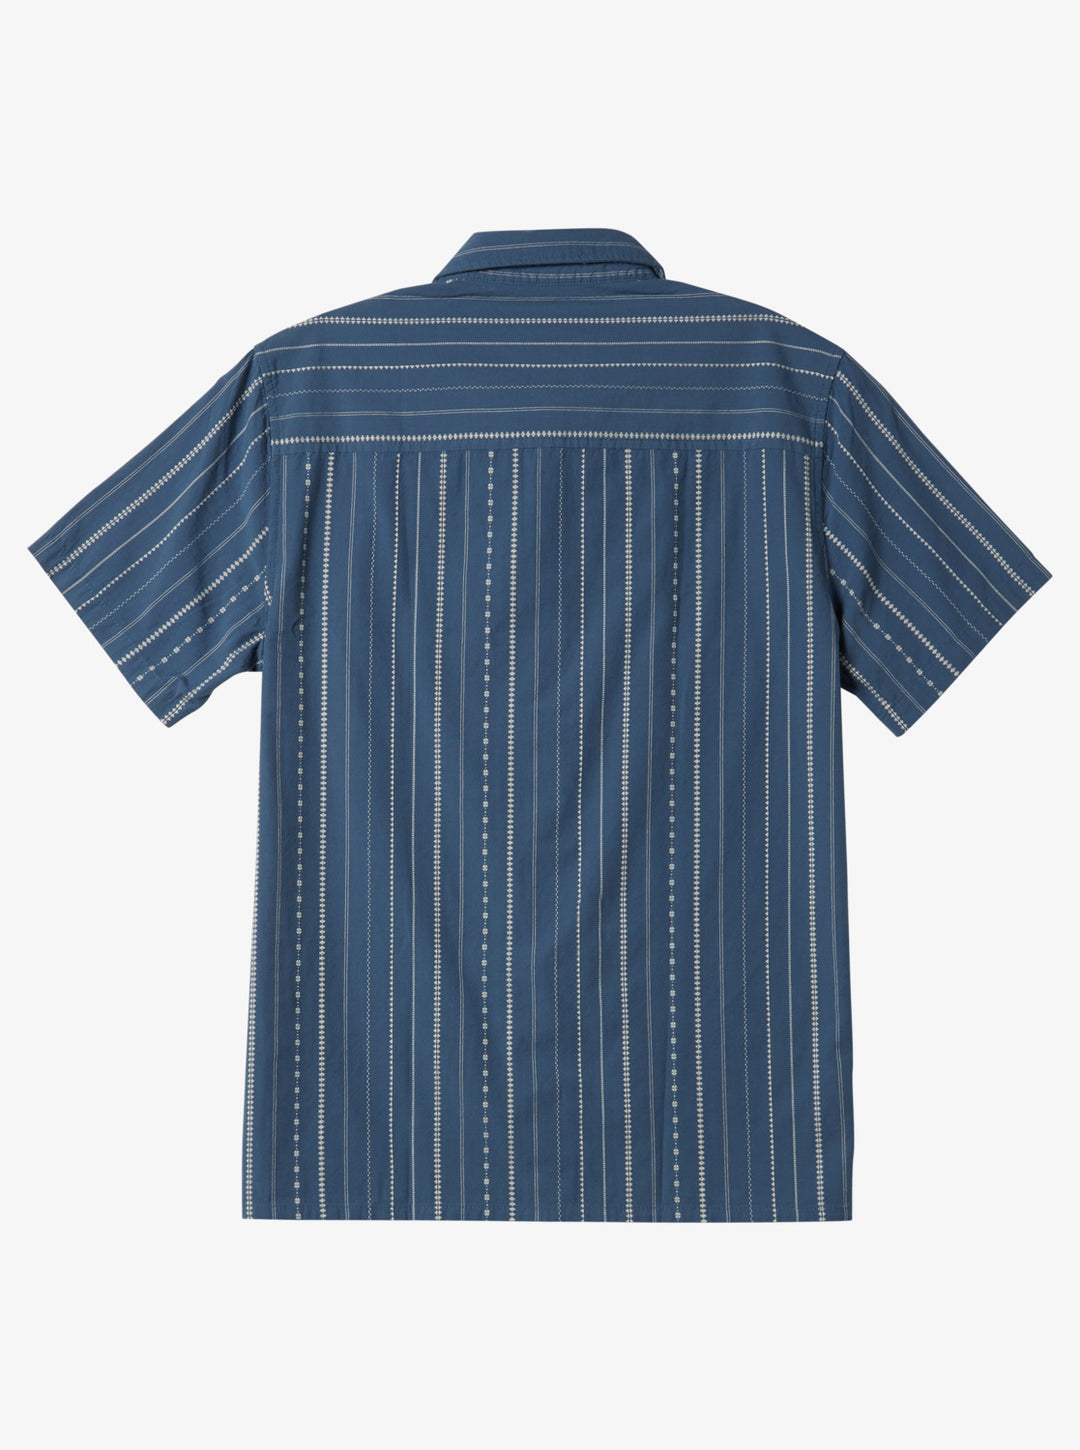 Quiksilver Pacific Stripe Short Sleeve Woven Shirt - Berring Sea - Sun Diego Boardshop